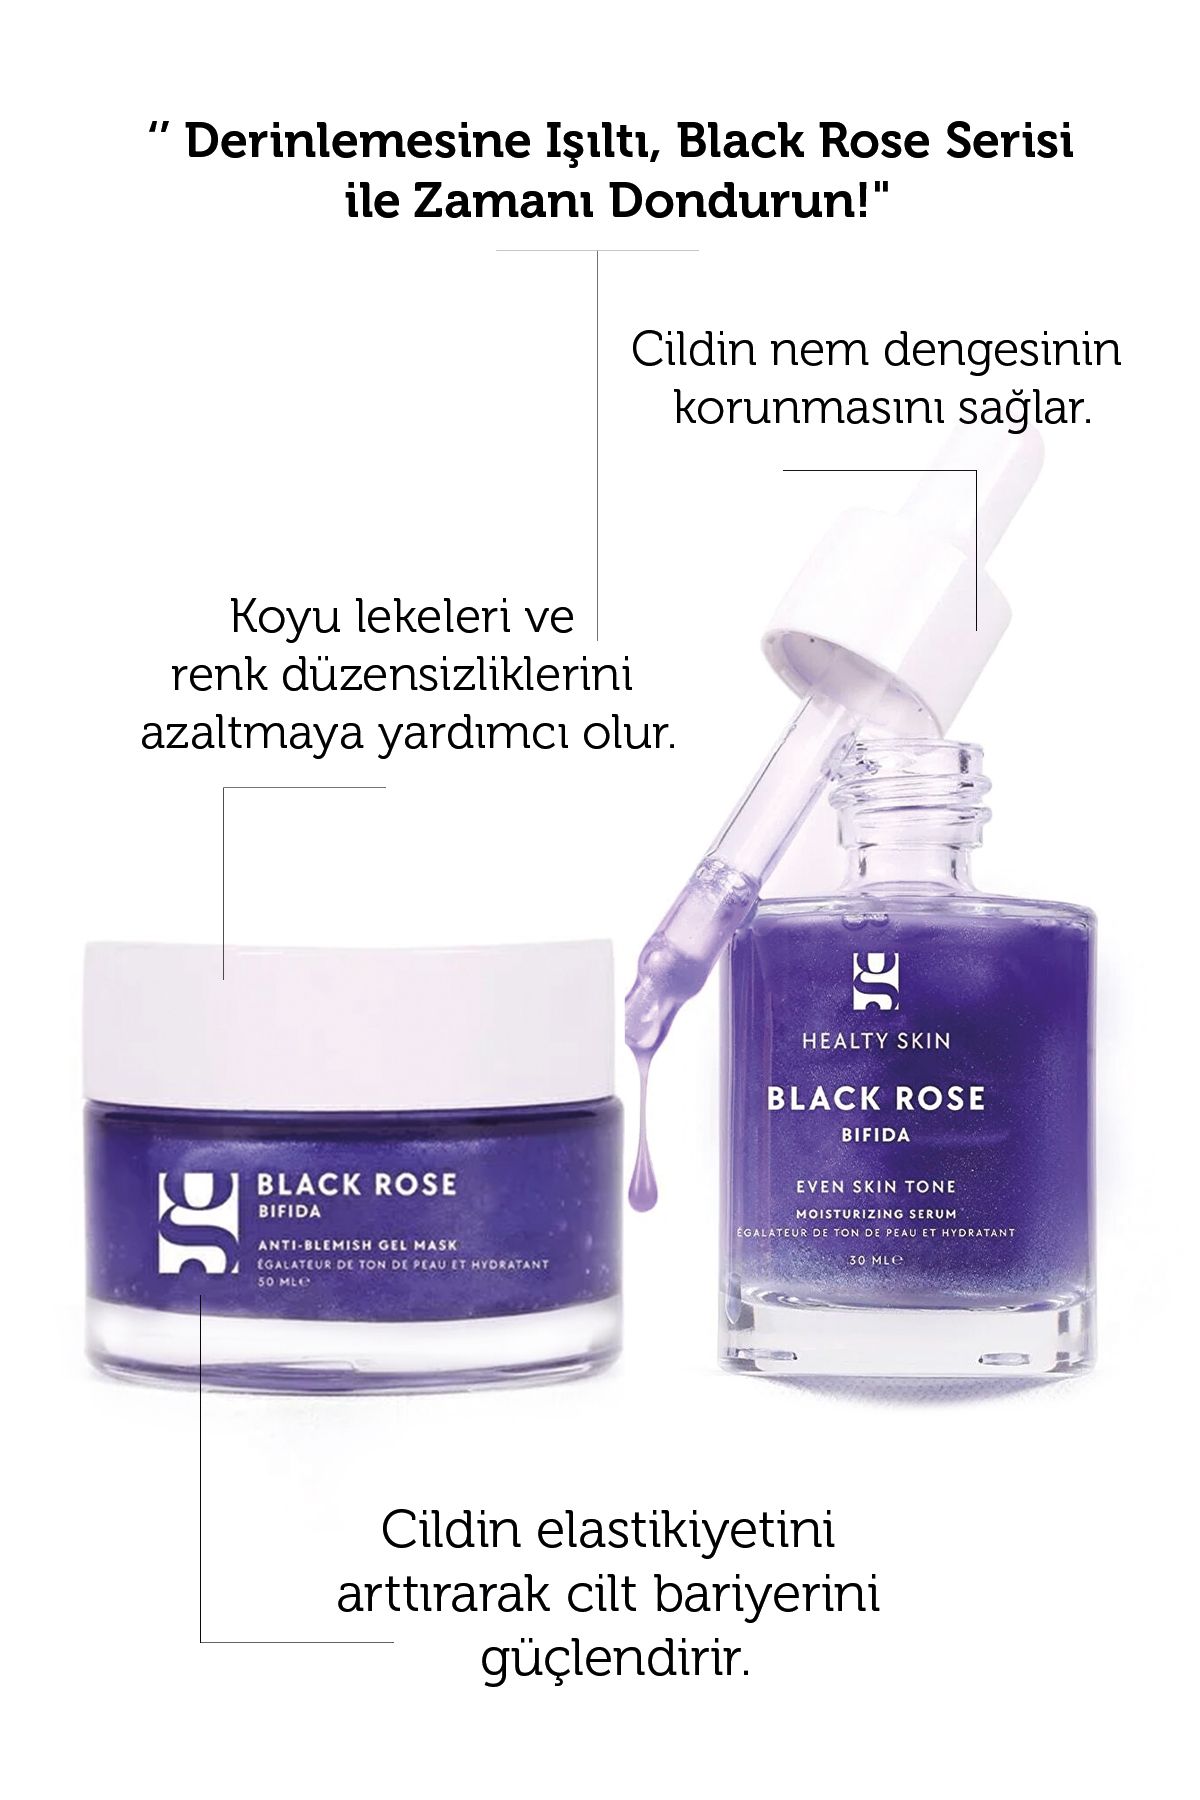 GLOUR Black Rose Anti Blemish Jel & Even Skin Ton Eşitleyici Serum İkili Set